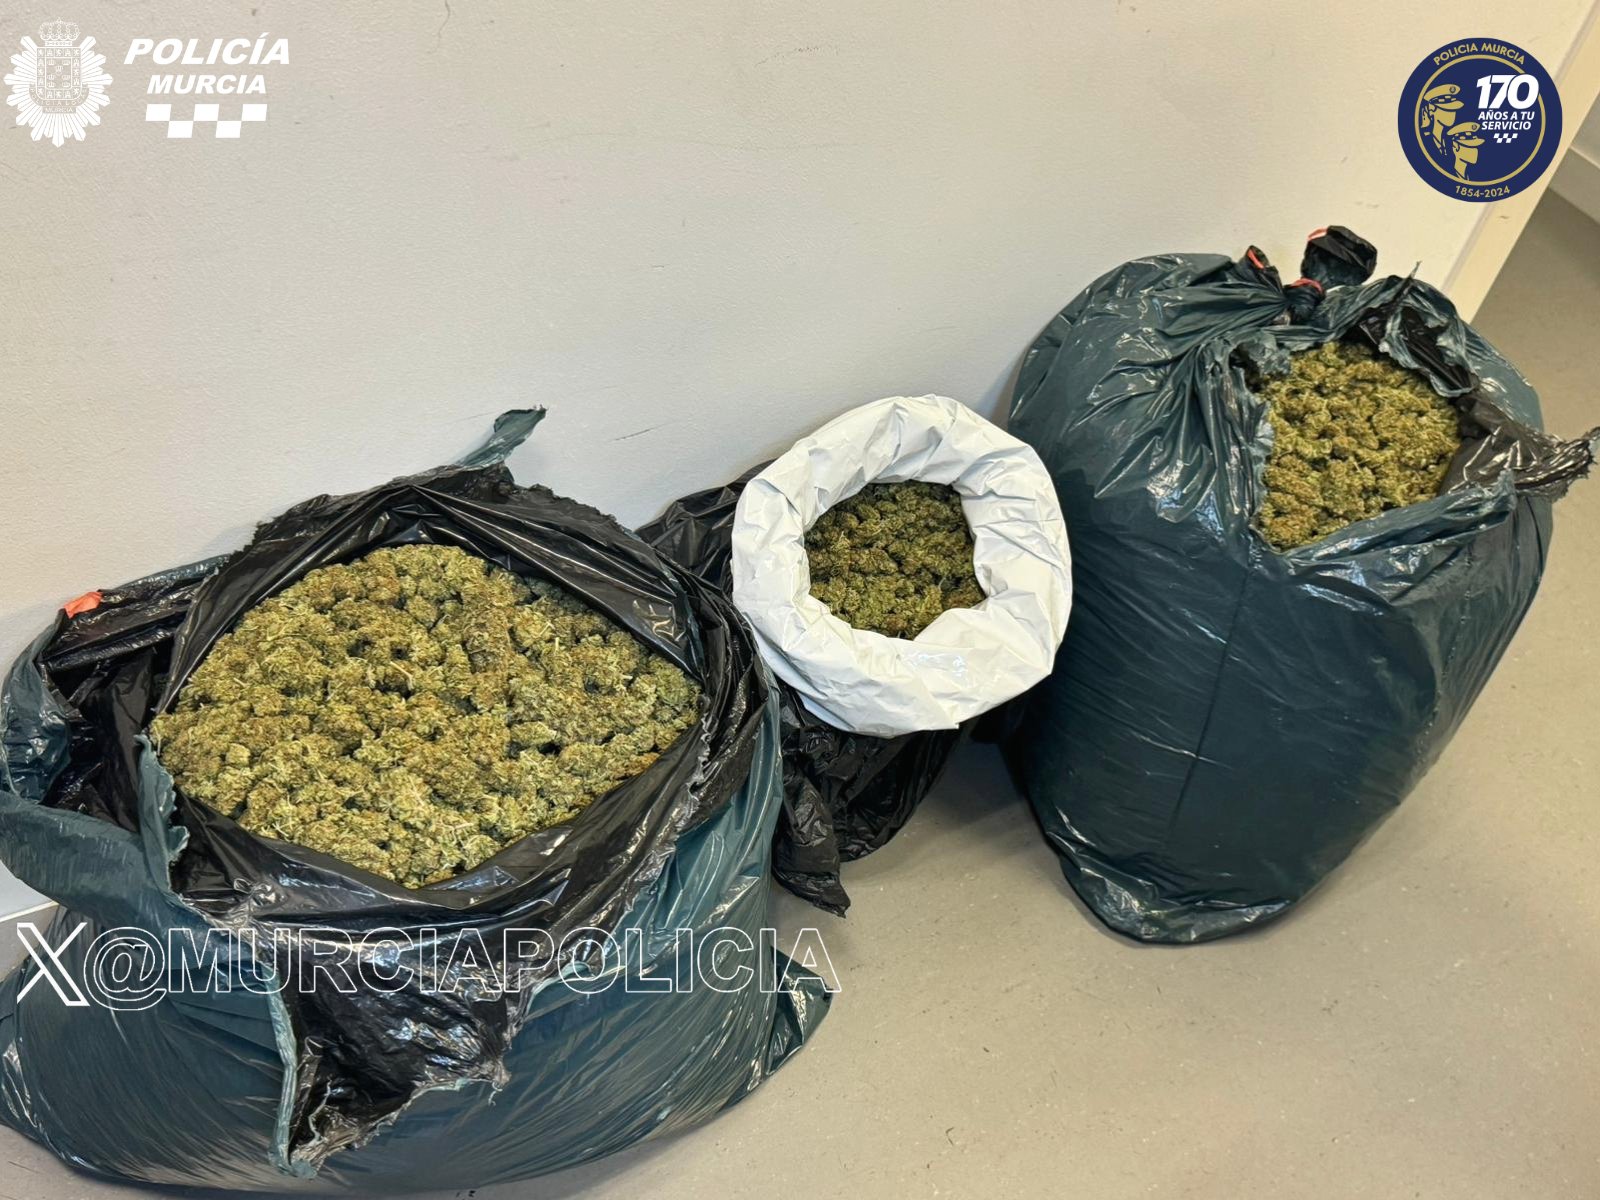 Incautan 12 kilos de marihuana en Murcia